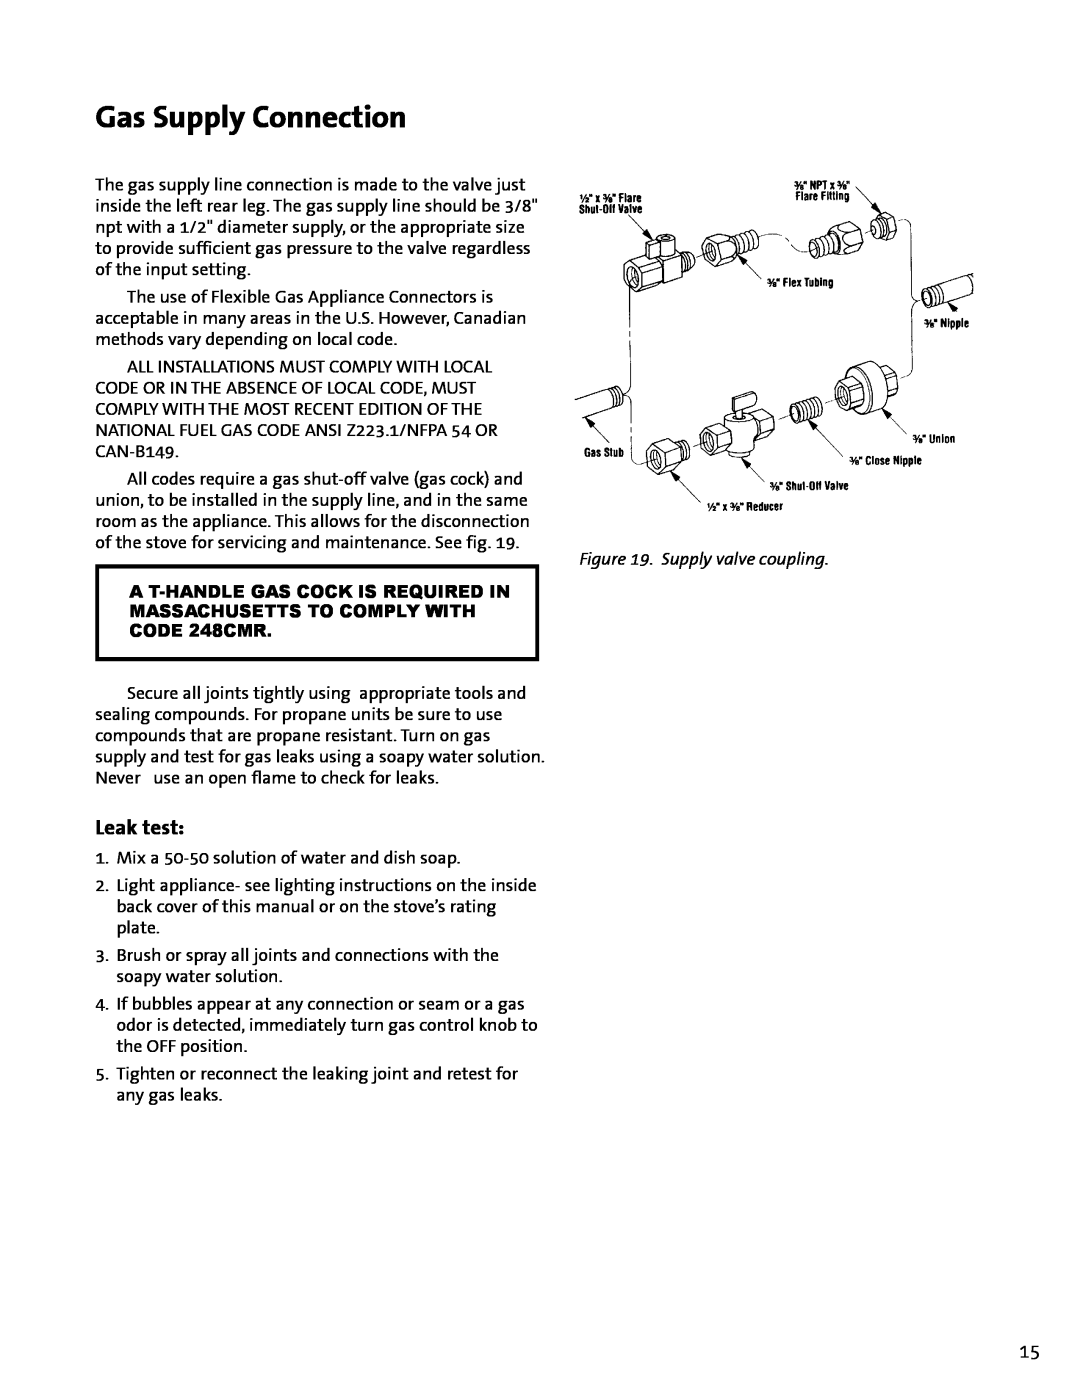 Jotul GF100 DV manual Gas Supply Connection, Leak test, Supply valve coupling, CODE 248CMR 